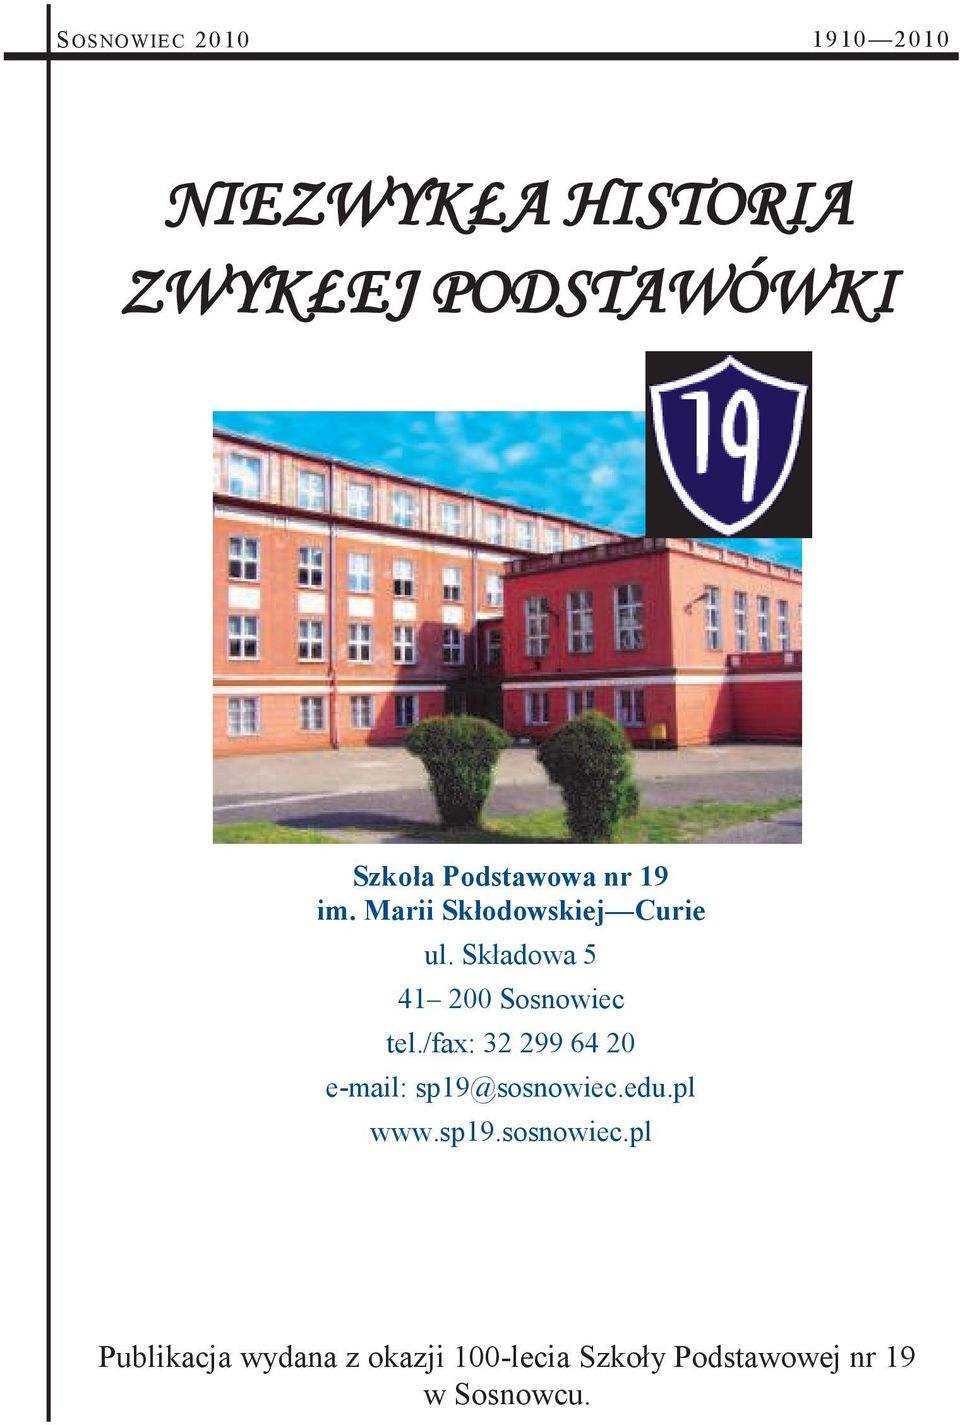 Składowa 5 41 200 Sosnowiec tel./fax: 32 299 64 20 e-mail: sp19@sosnowiec.